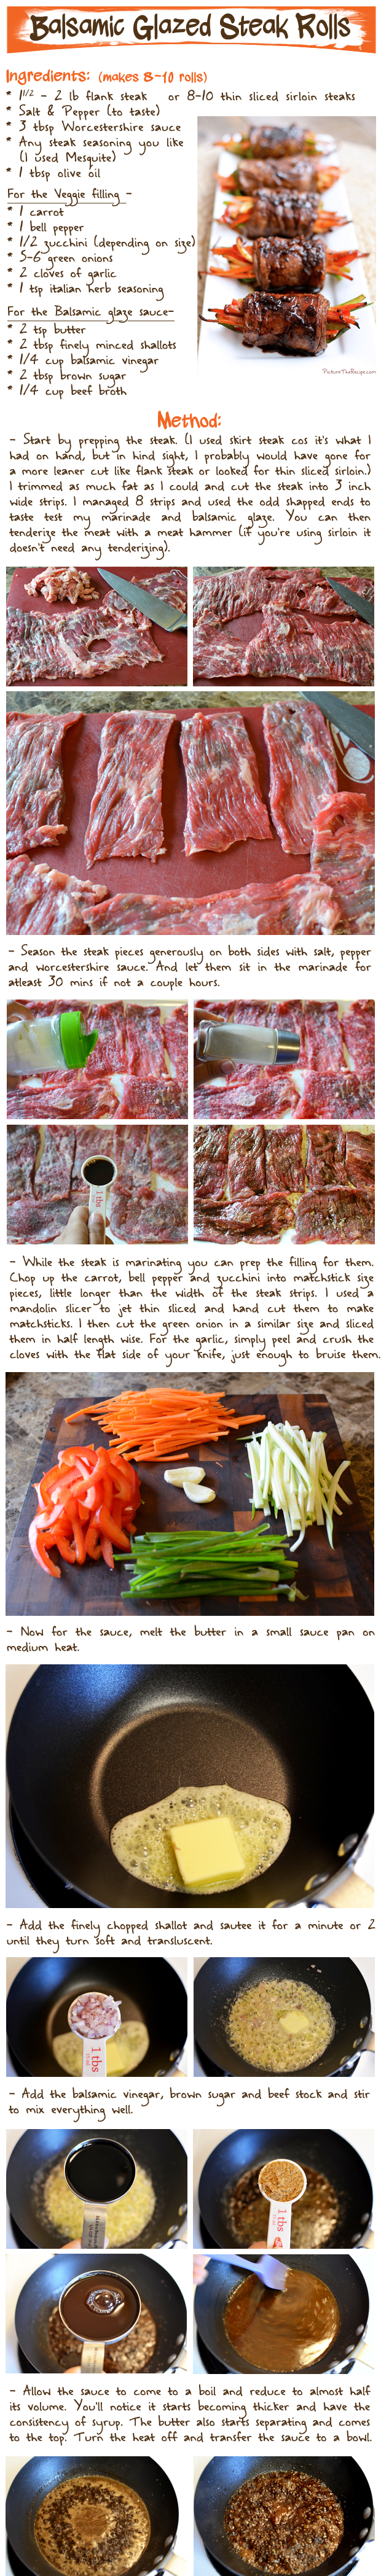 Balsamic Glazed Steak Rolls Recipe (Part-1)